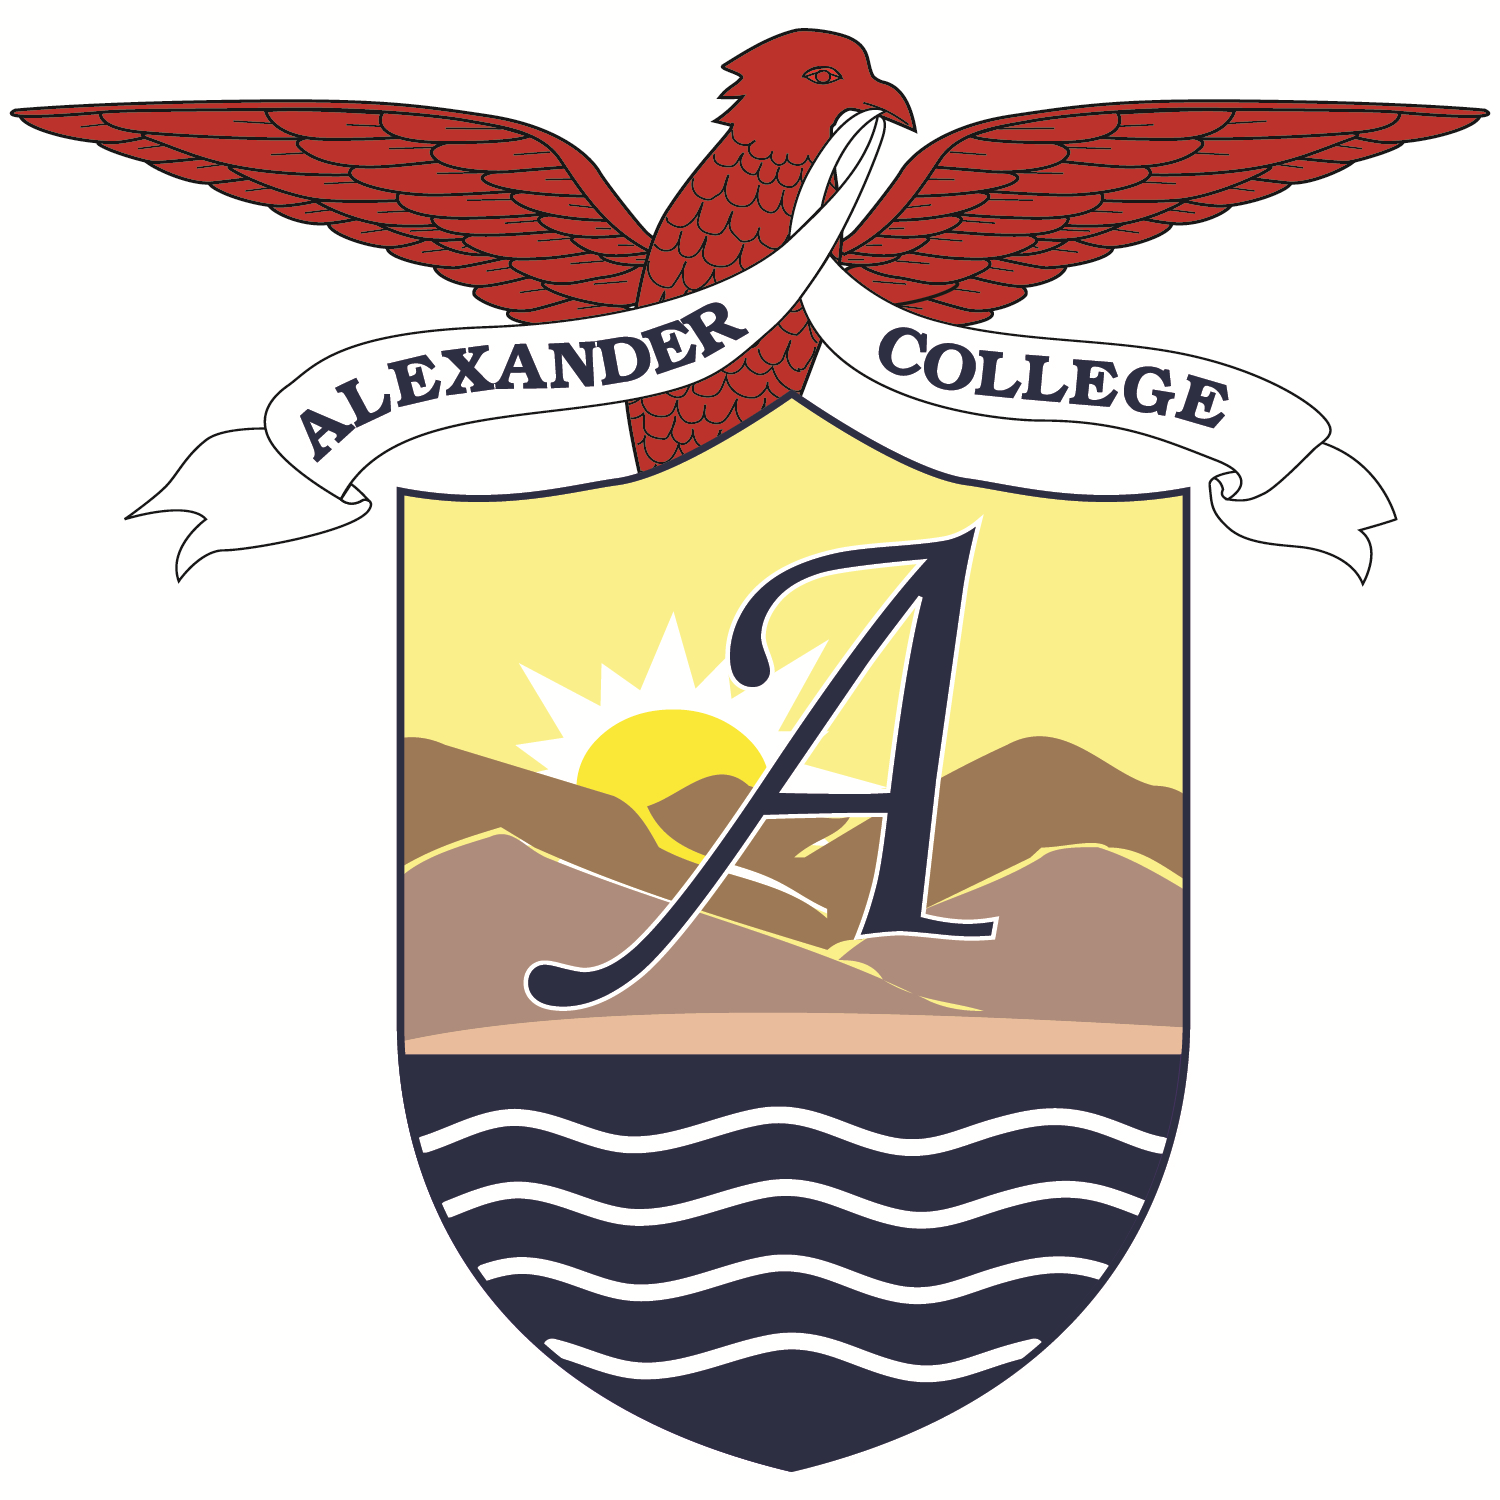 Alexander College's logo